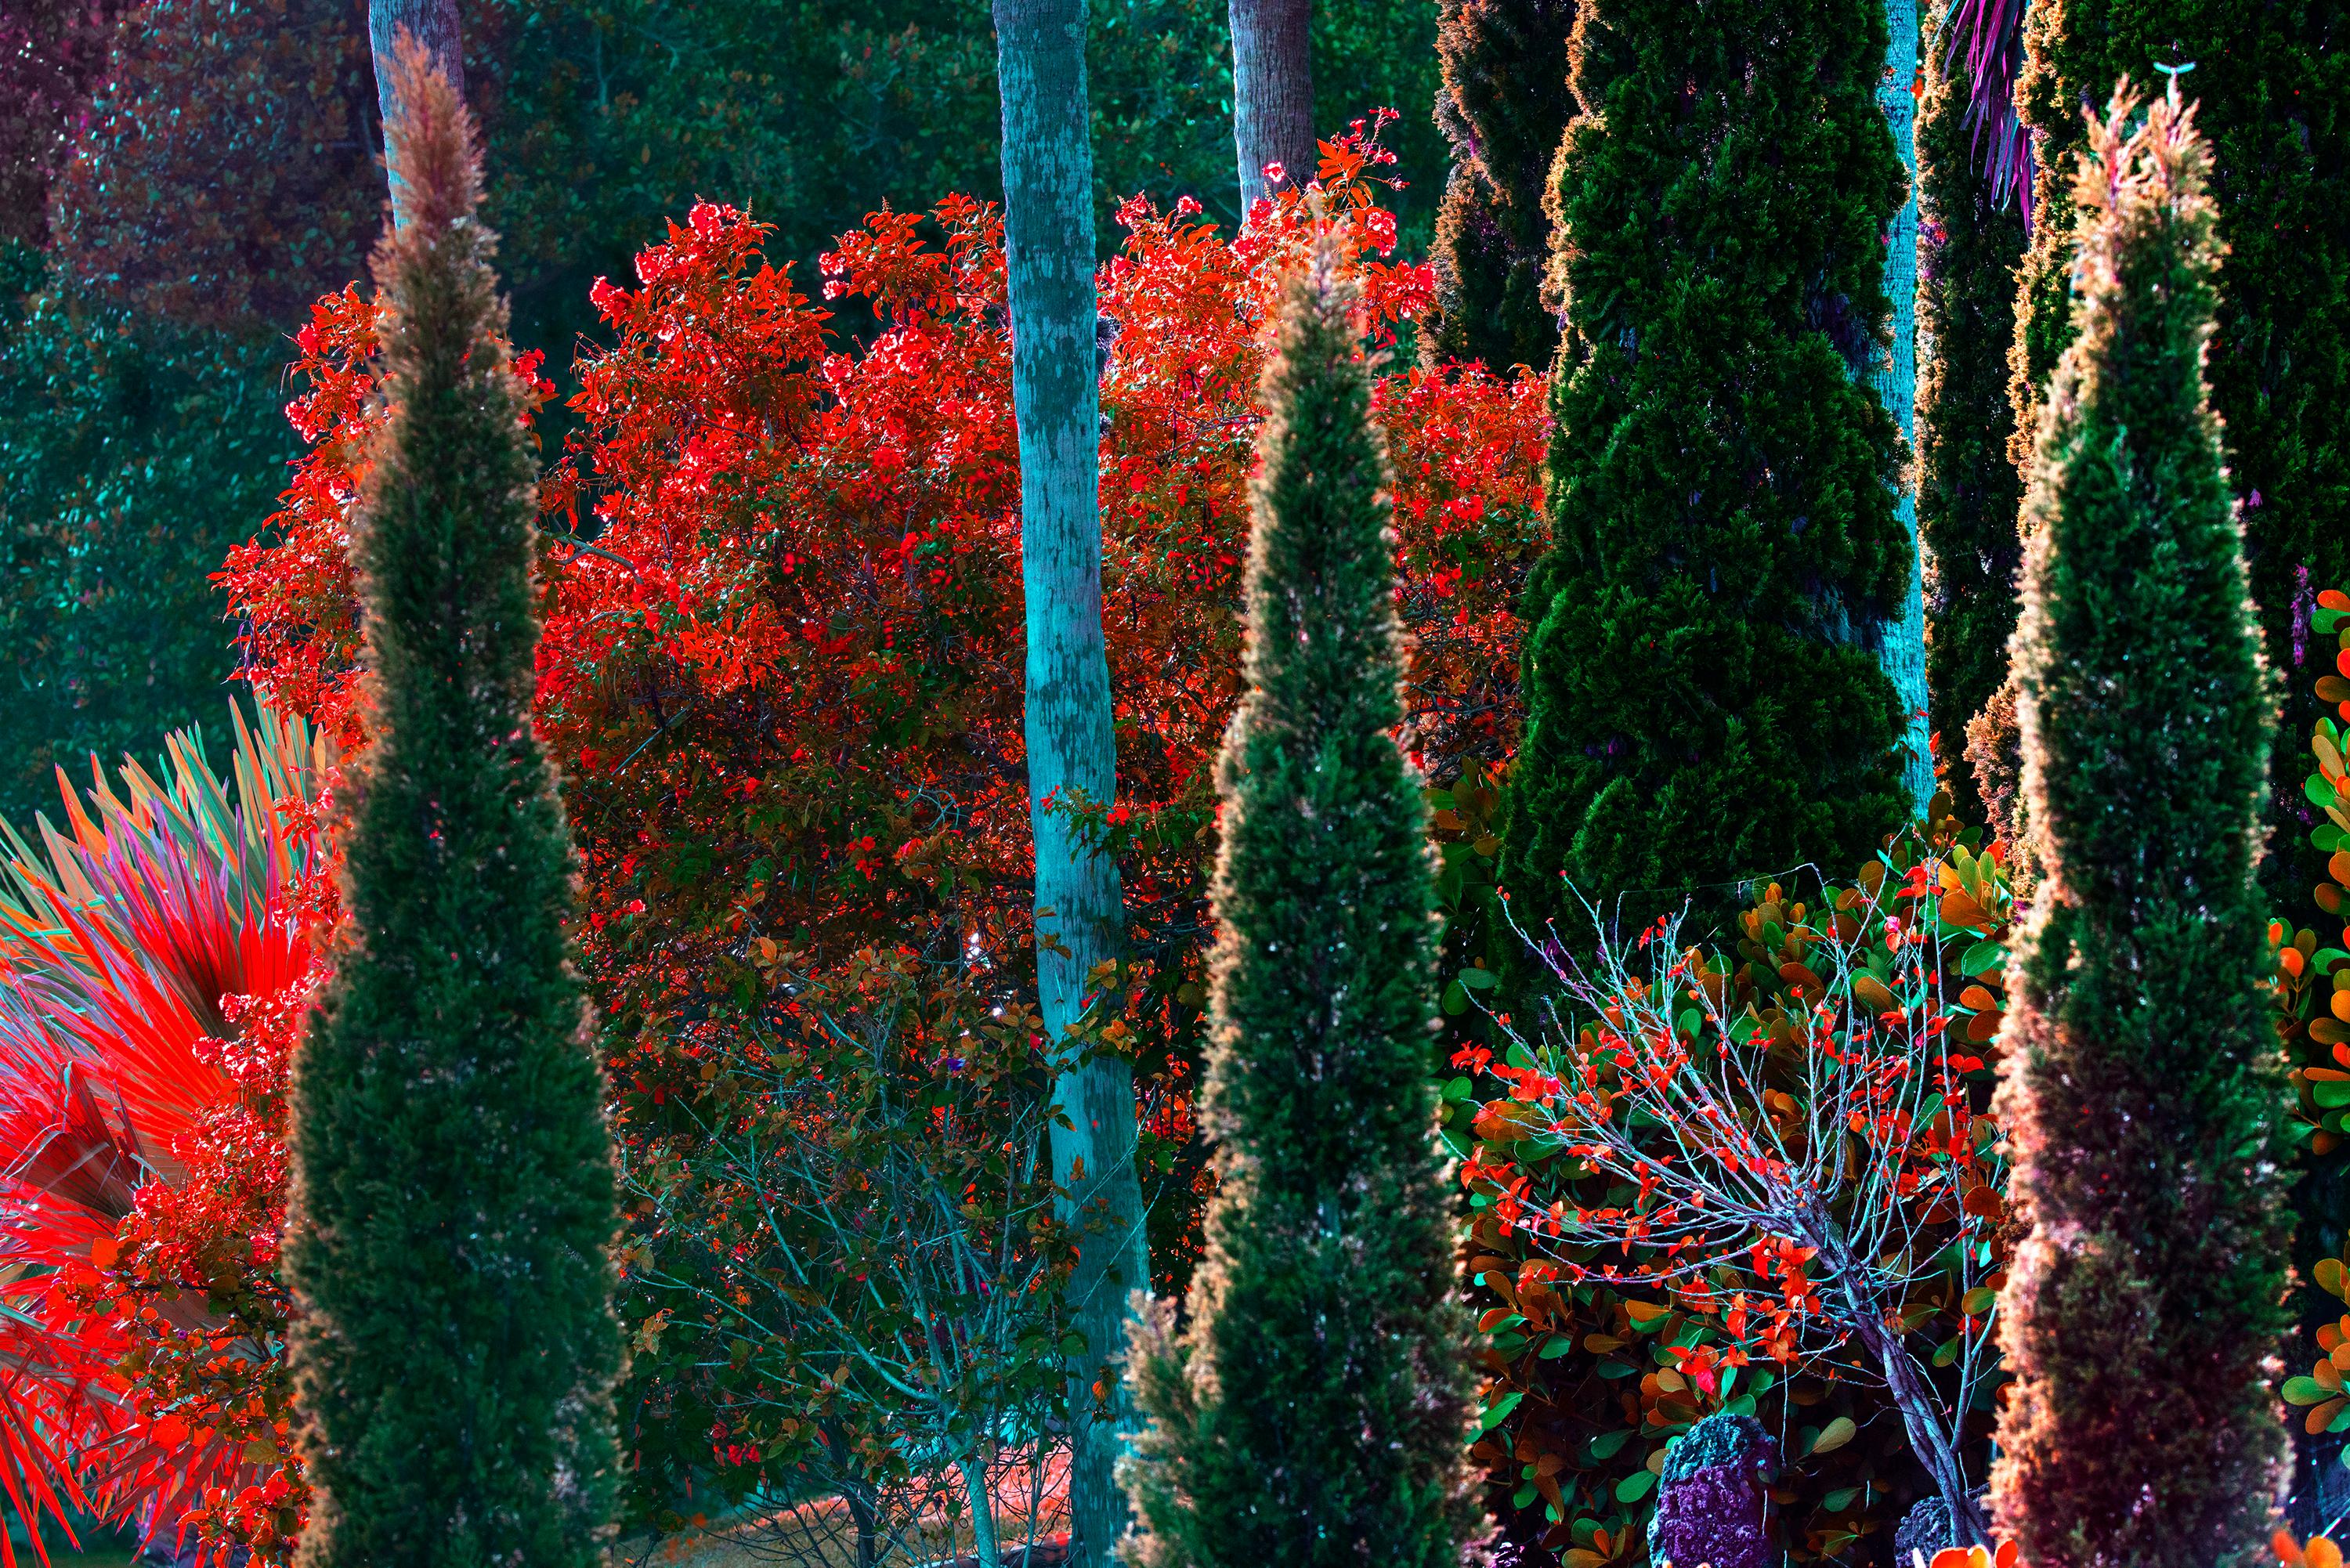 Robert Funk Landscape Photograph – Tropisches, farbenfrohes Laub  Bäume blühende Brillantfarbe  Blätter aus Crimsonholz